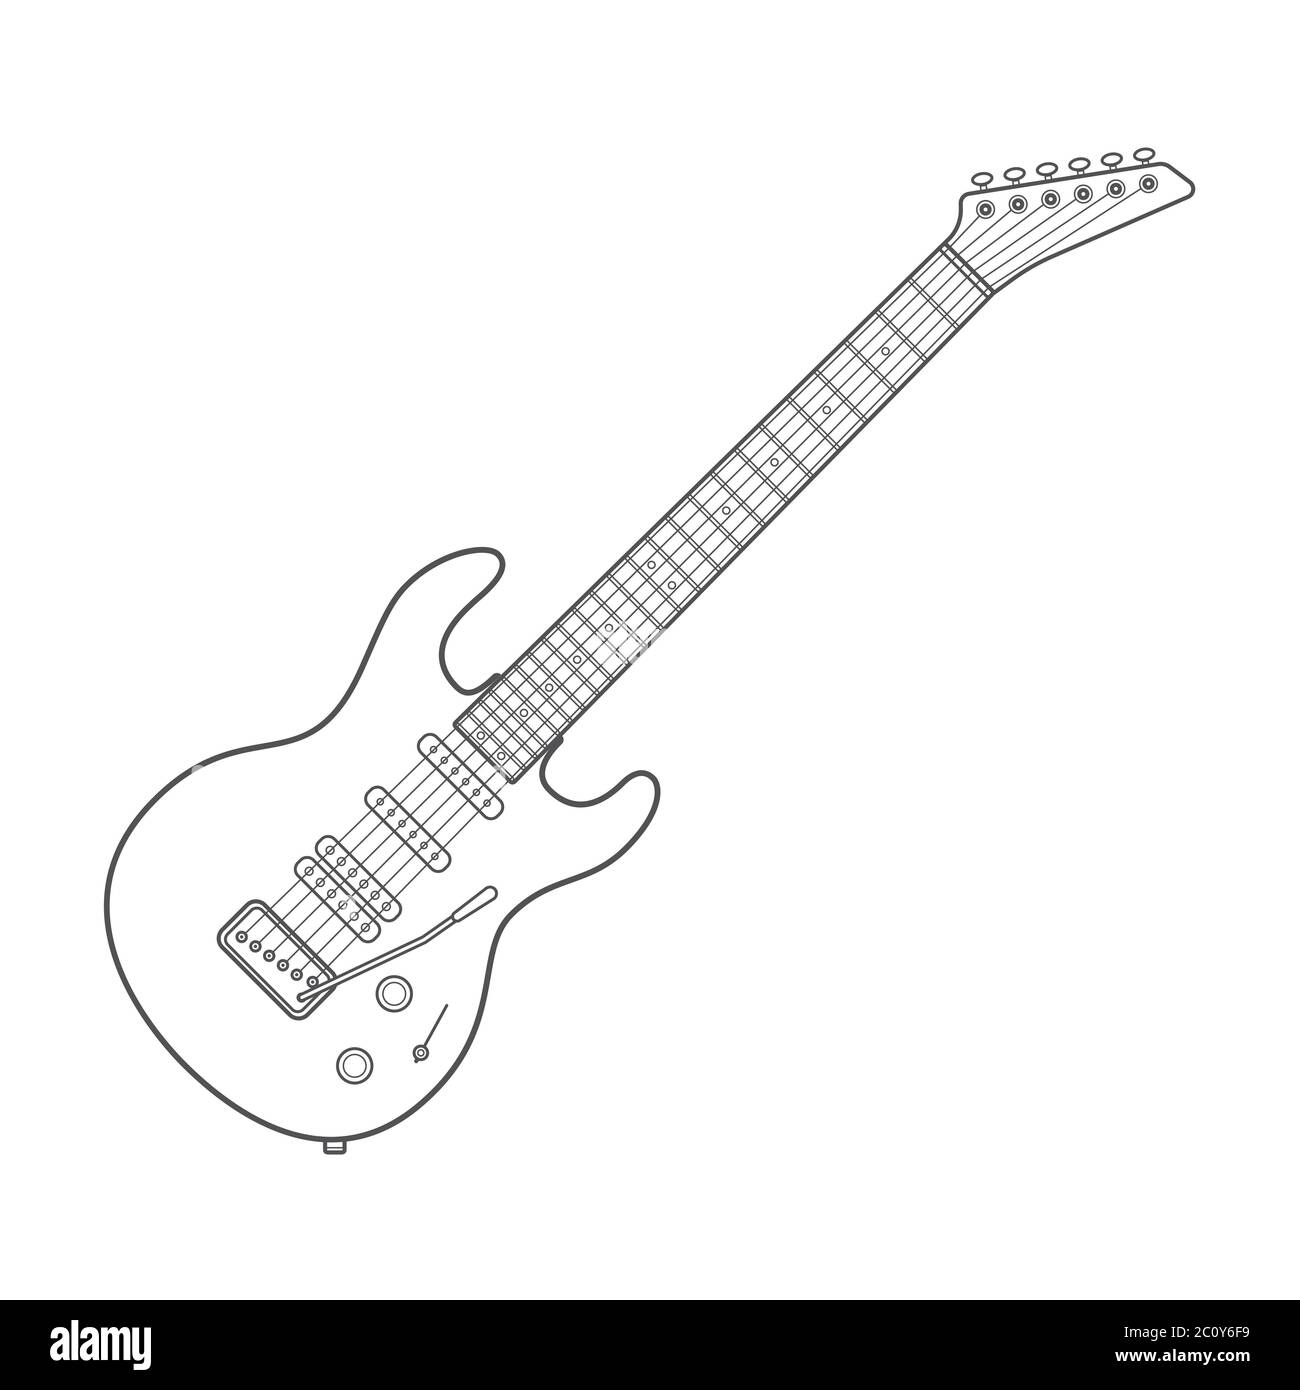 ilustración técnica de guitarra eléctrica de contorno oscuro Fotografía de  stock - Alamy